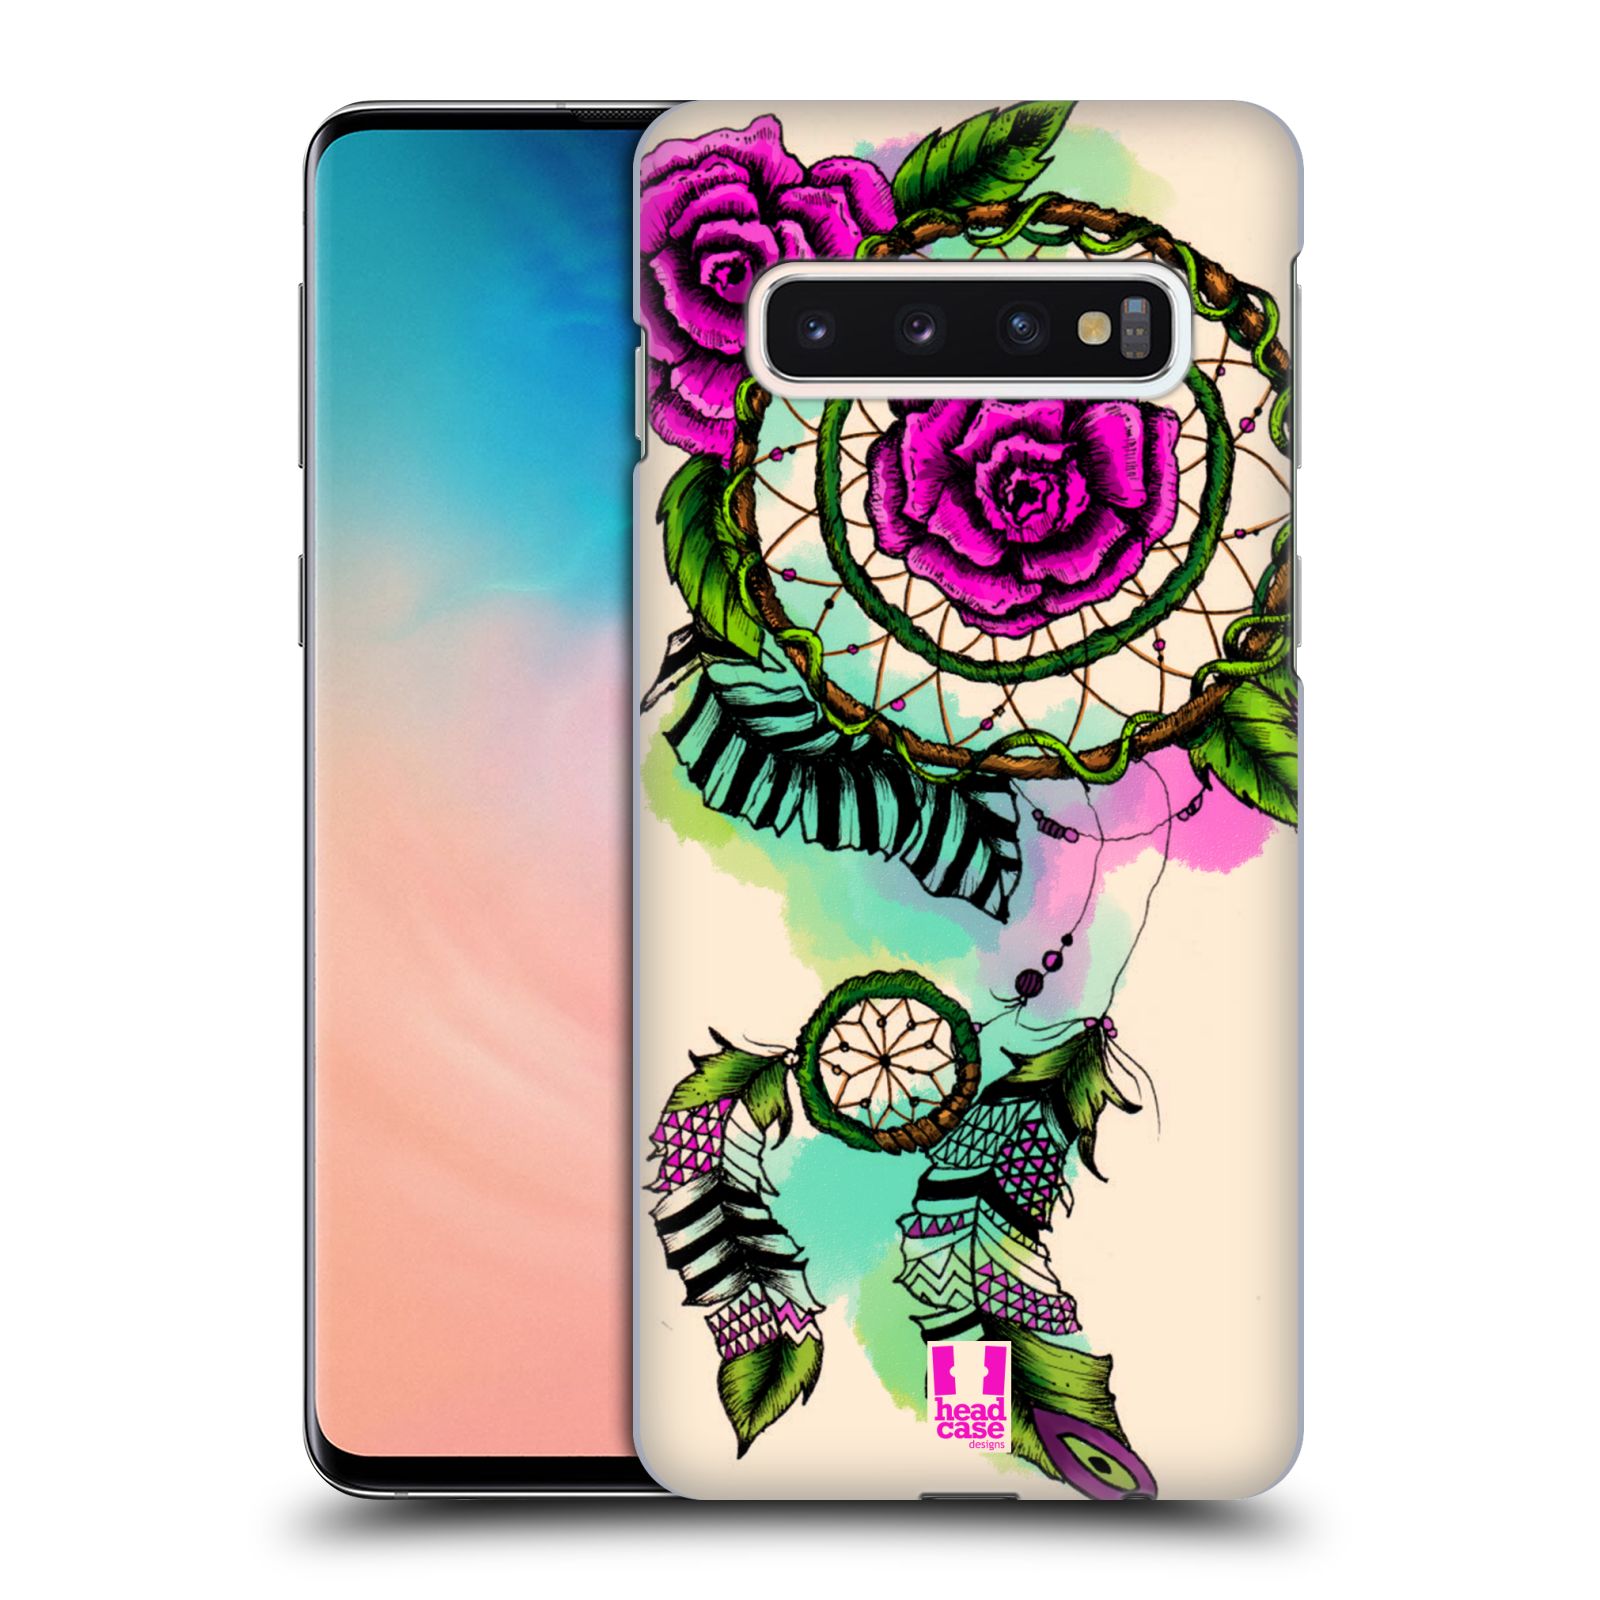 Pouzdro na mobil Samsung Galaxy S10 - HEAD CASE - vzor Květy lapač snů růže